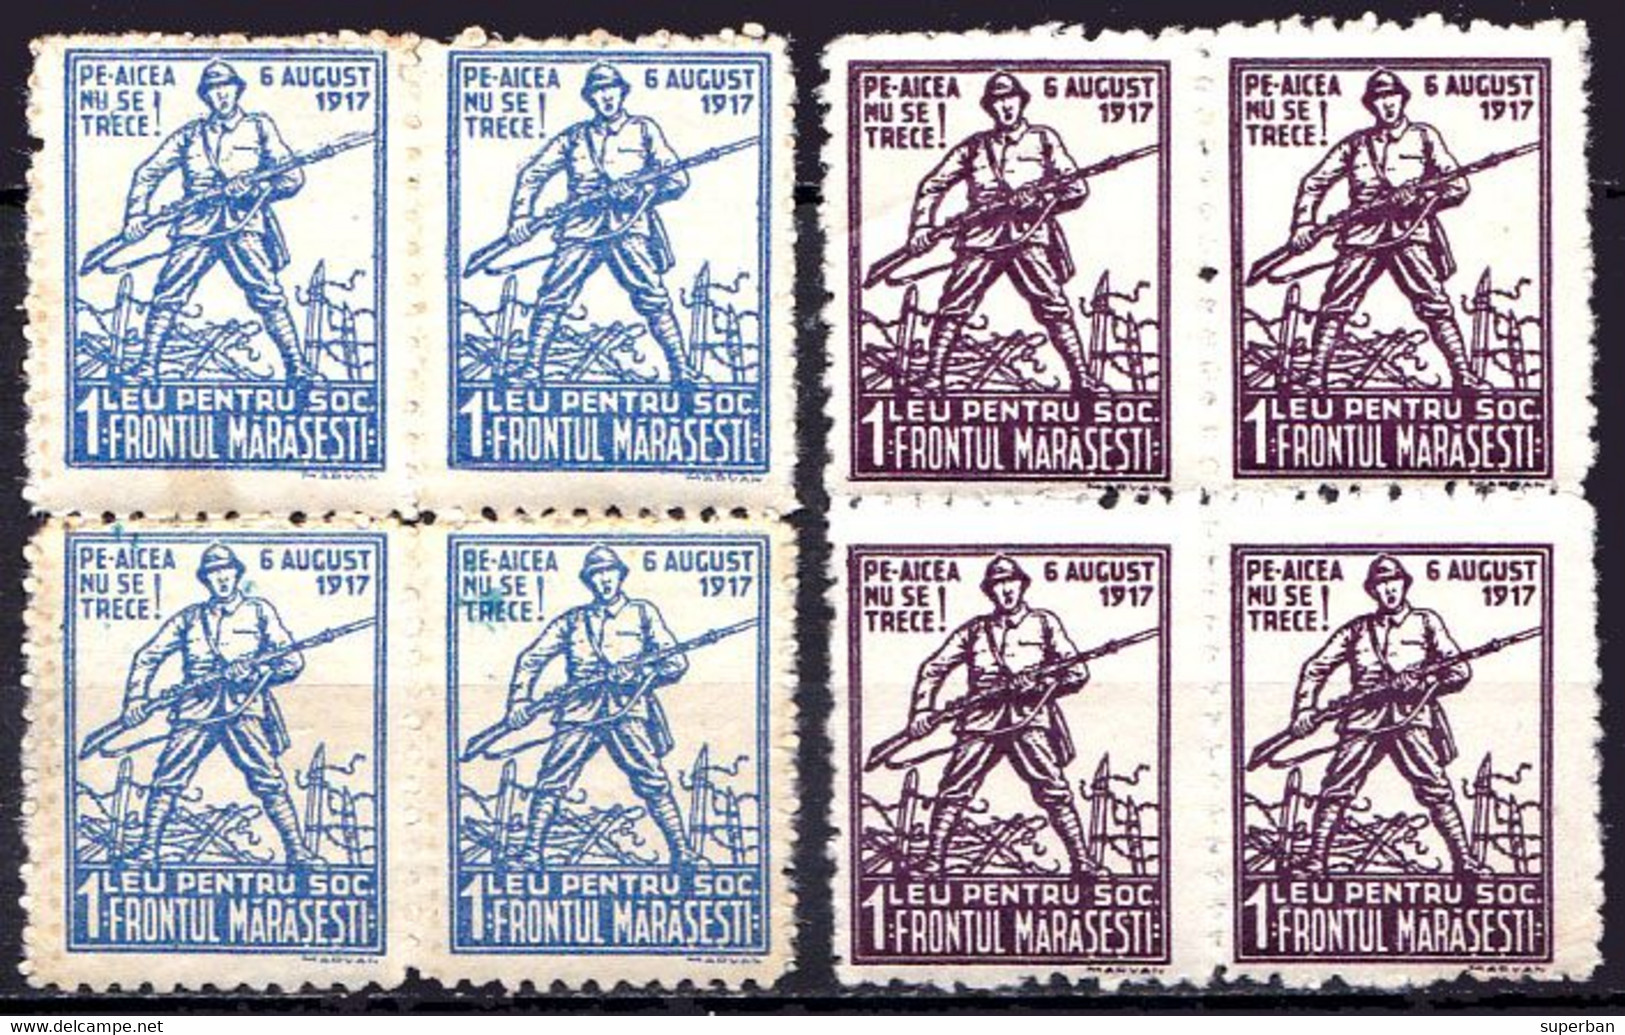 ROMANIA - CINDERELLA : SOCIETATEA FRONTUL MARASESTI / 6 AUGUST 1917 - 2 BLOCURI De 4 TIMBRE X 1 LEU ~ 1920 - MNH (ai526e - Fiscaux